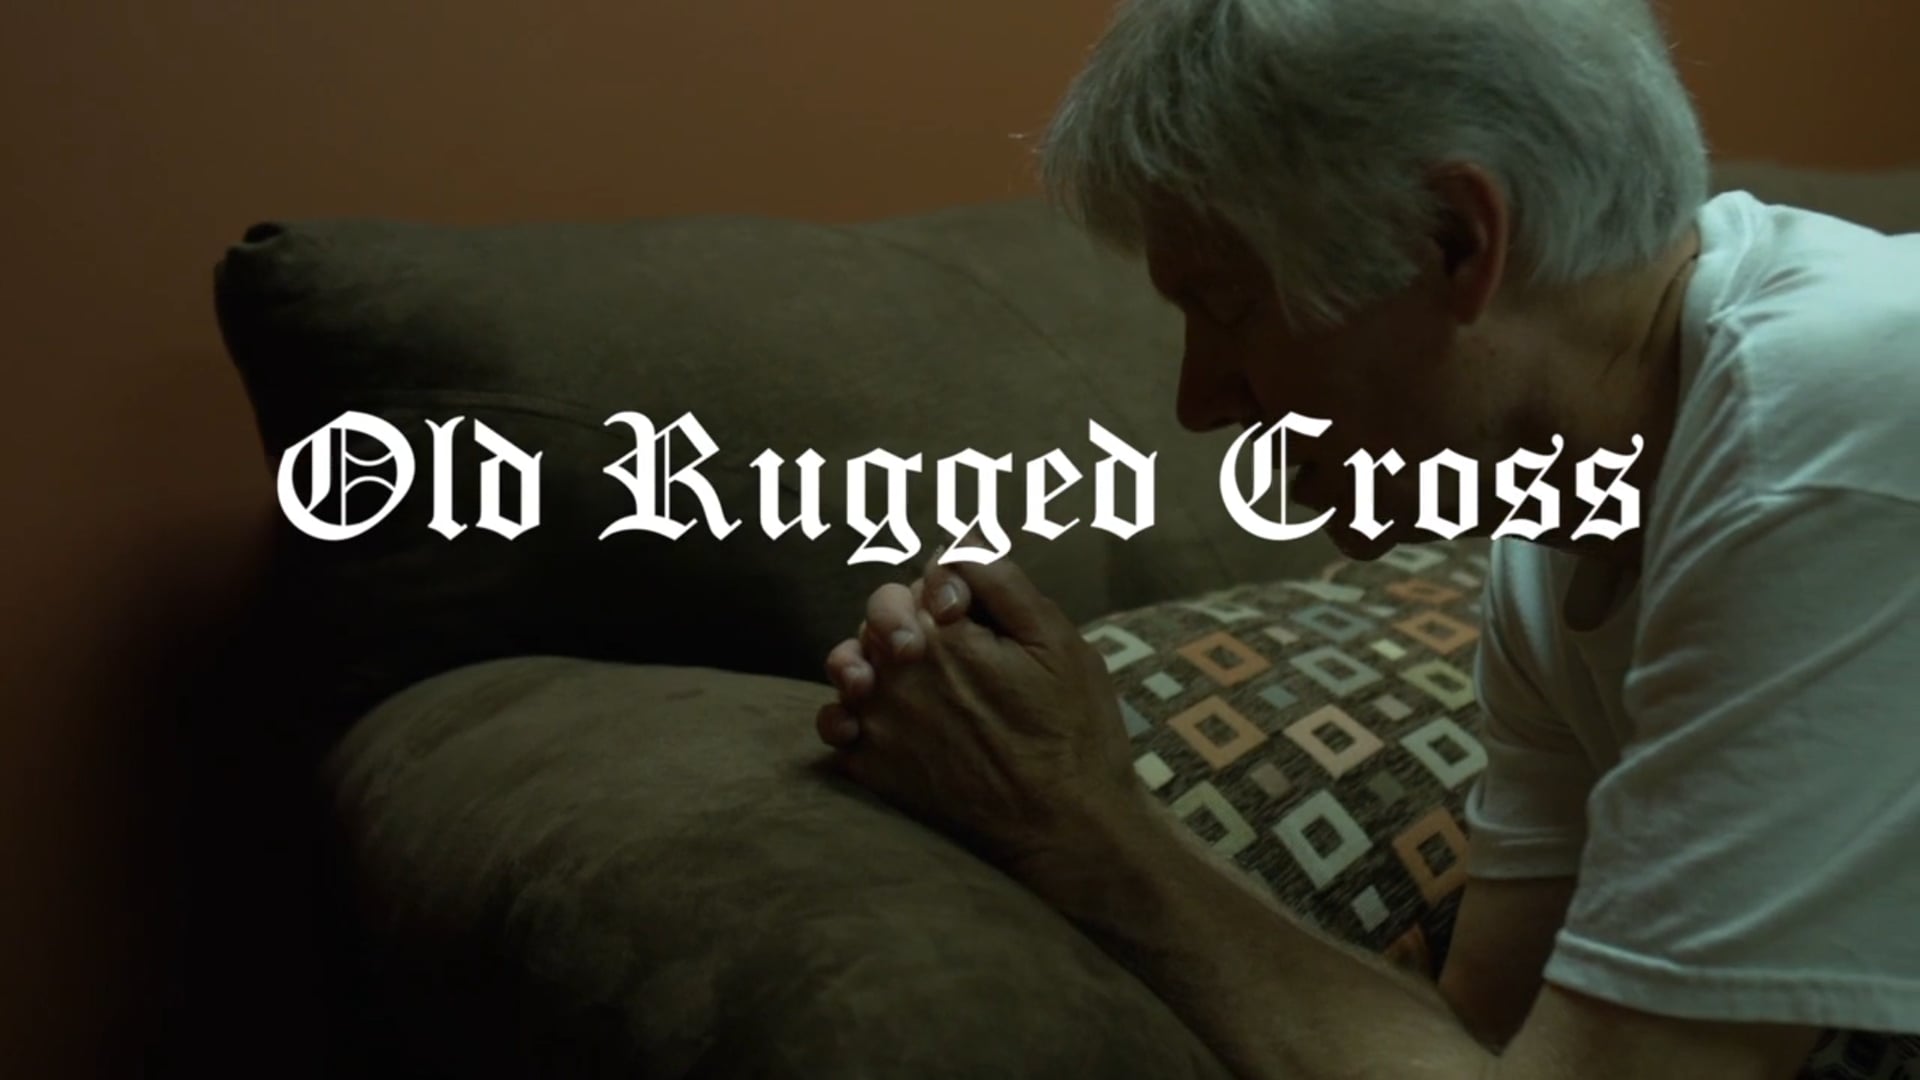 Old Rugged Cross – Movie